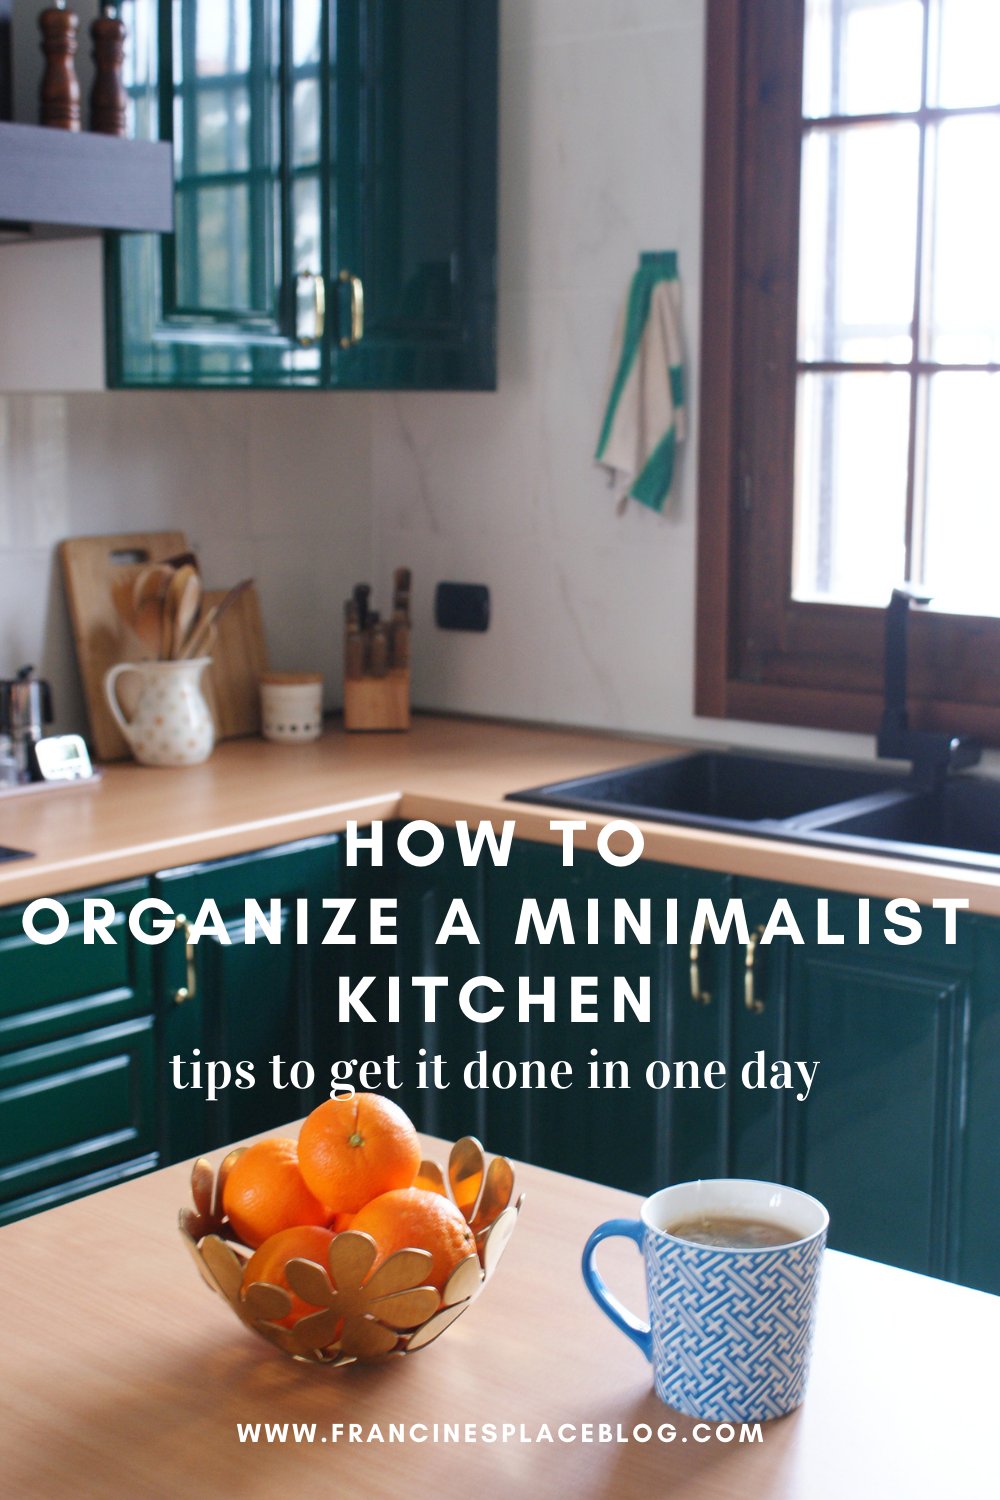 how declutter organize kitchen minimalist tips ulimate come organizzare riordinare cucina minimalista consigli francinesplaceblog best